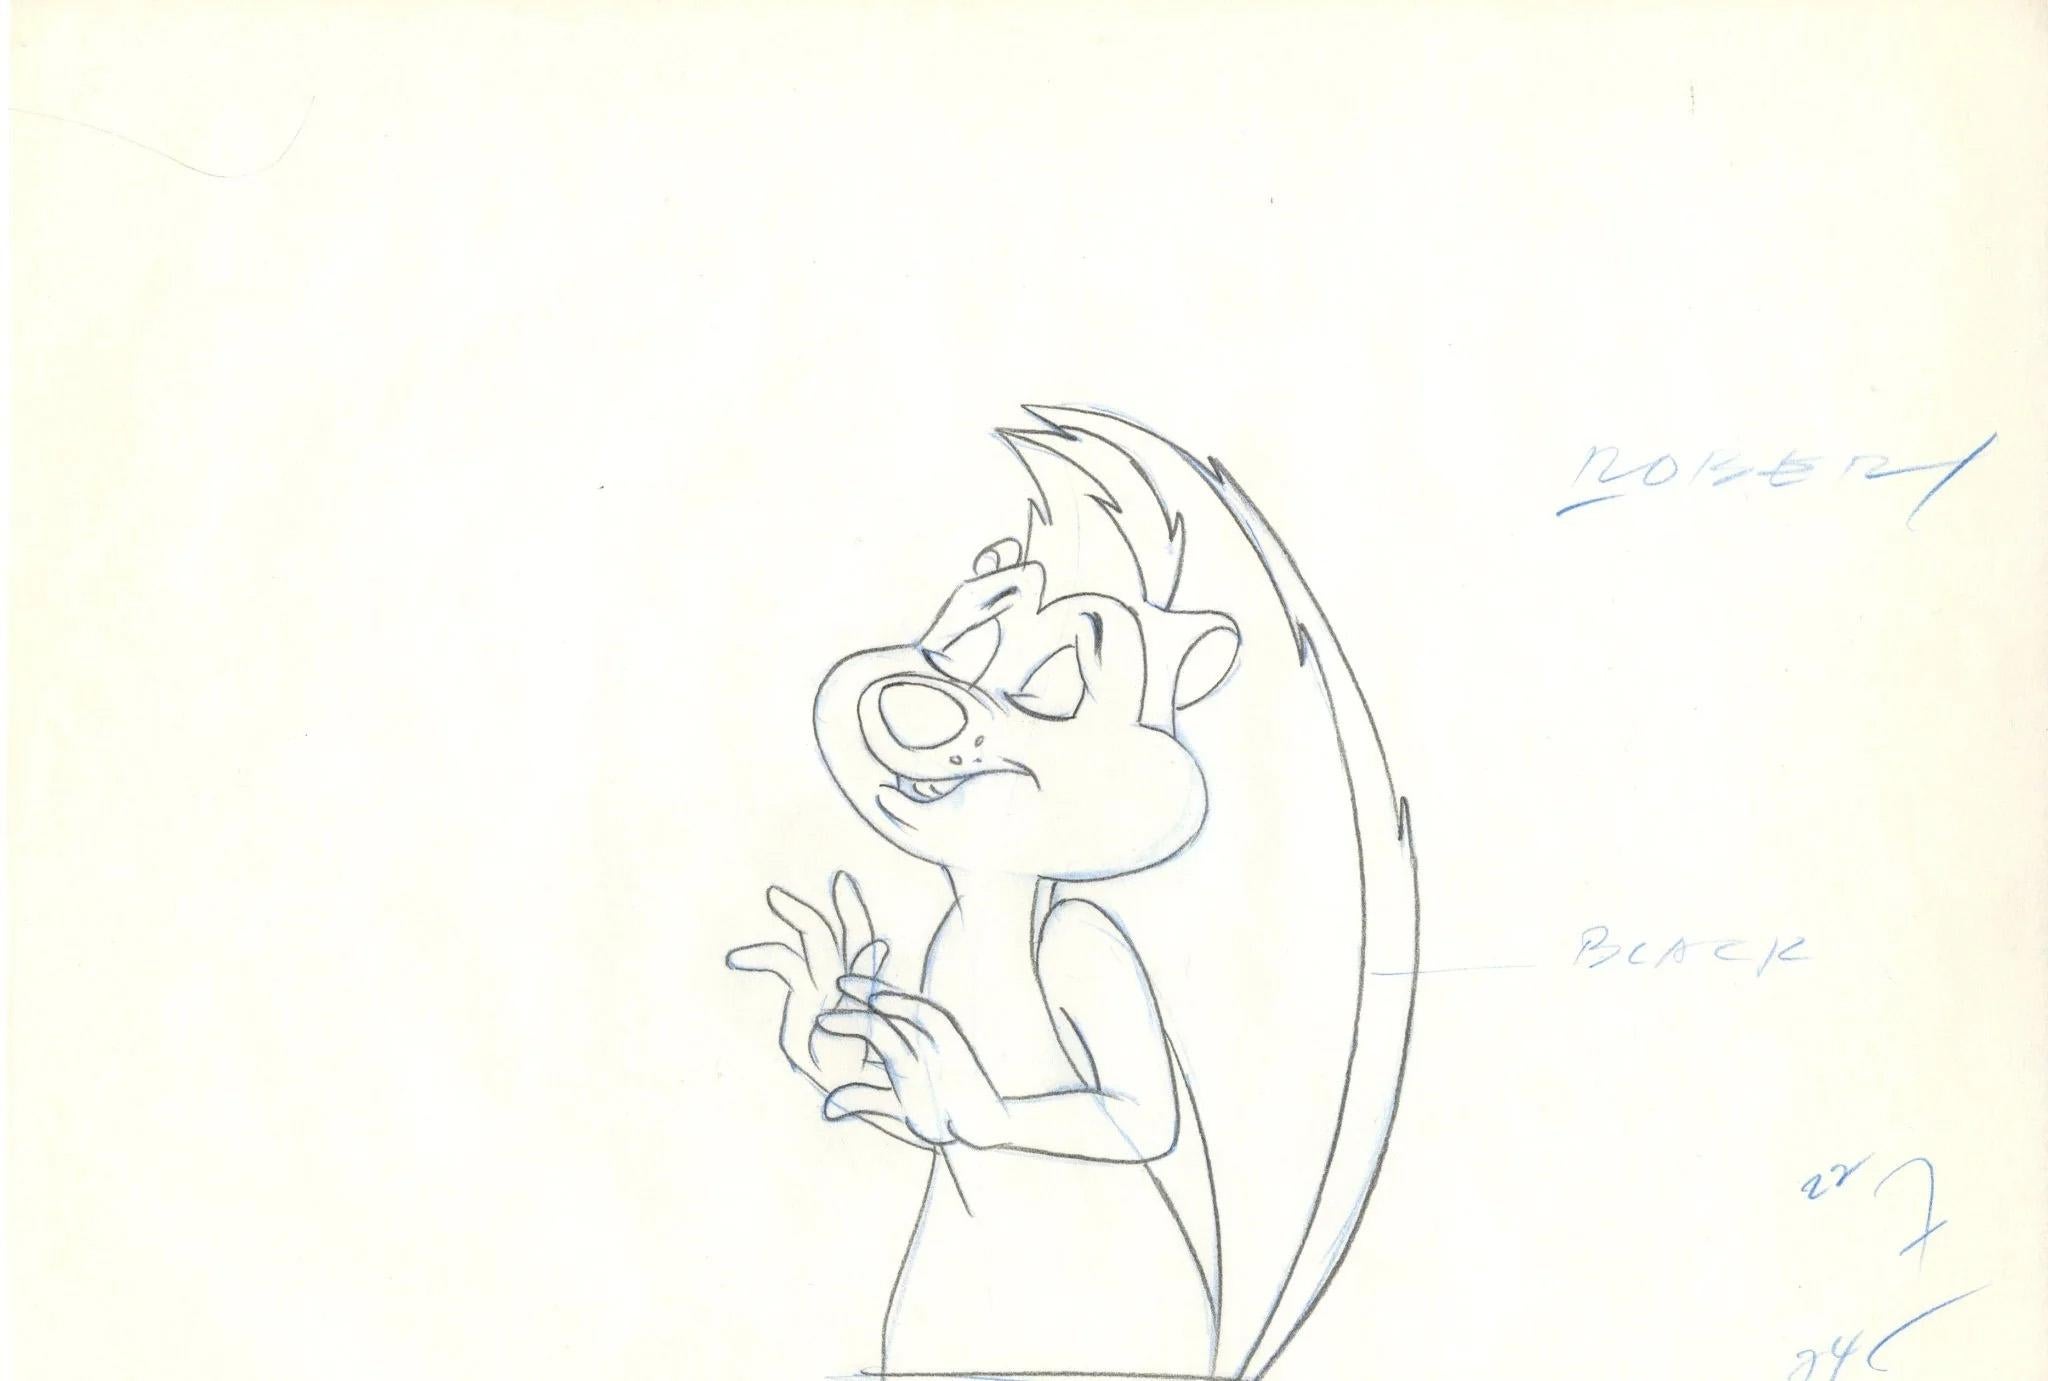 Looney Tunes Cel de production d'origine avec dessin assorti : Pepe - Pop Art Art par Looney Tunes Studio Artists